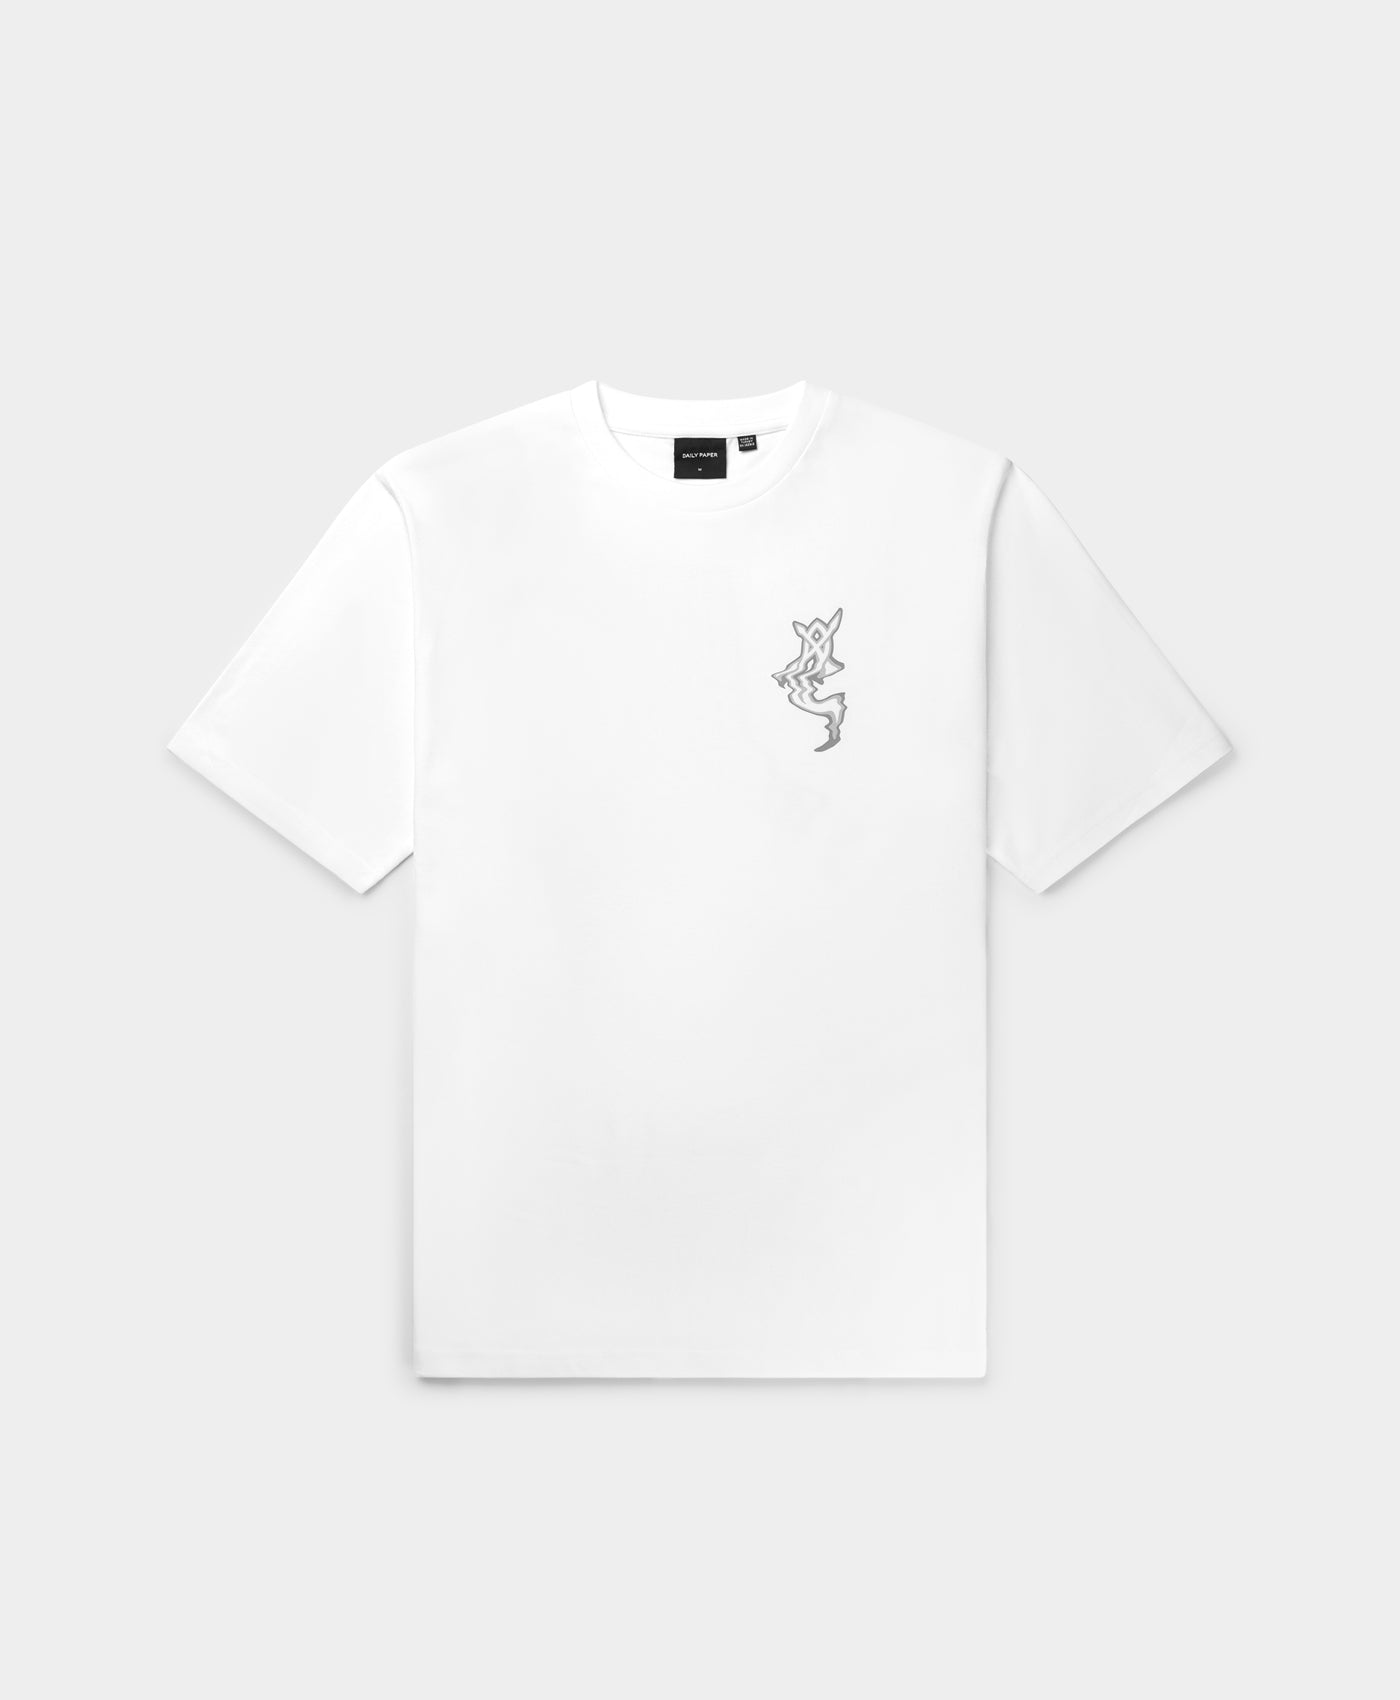 DP - White Reflection T-Shirt - Packshot - Rear